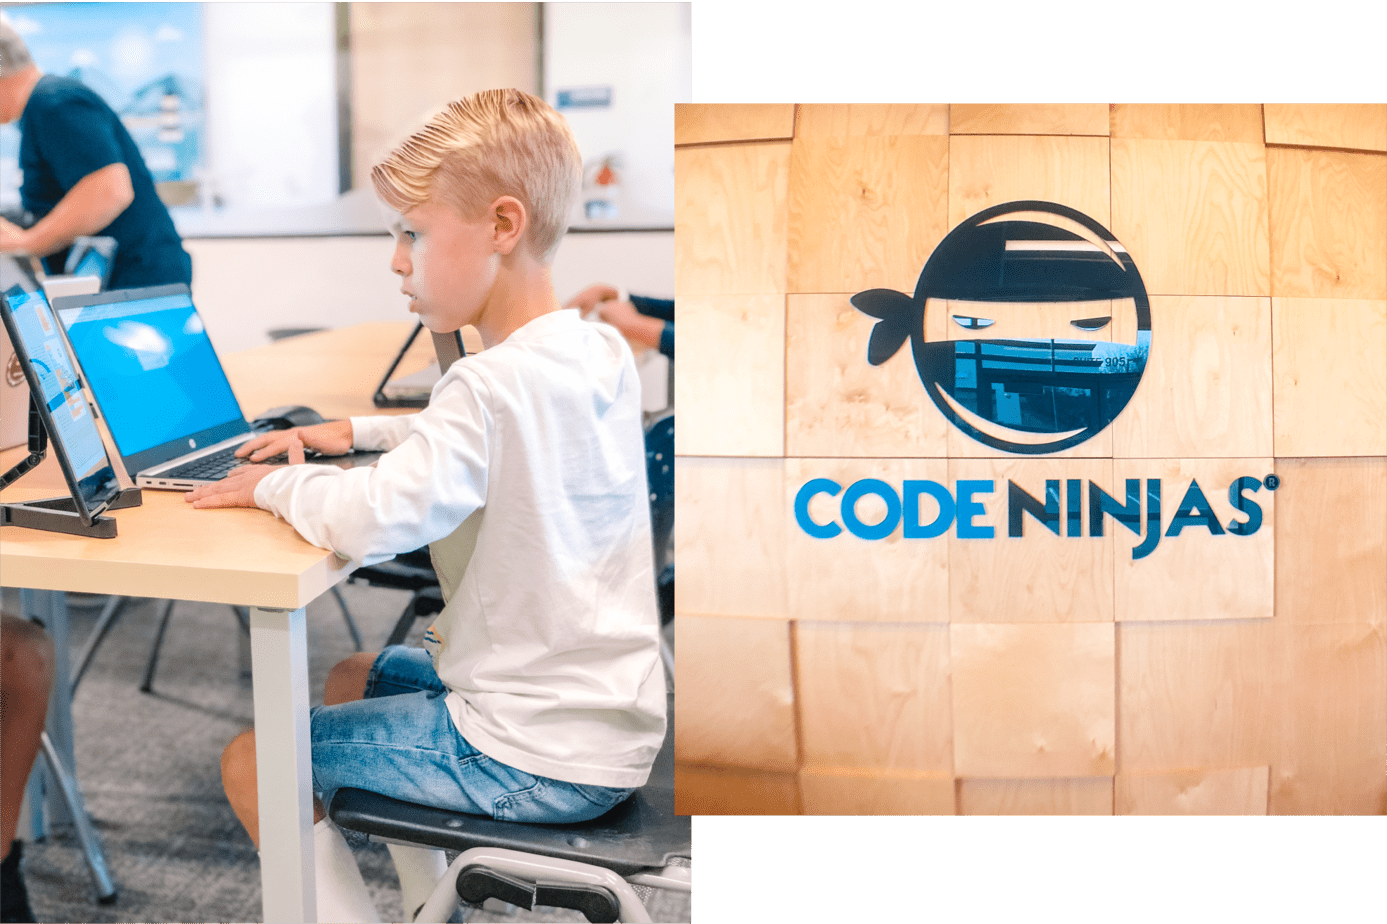 code ninjas gift idea